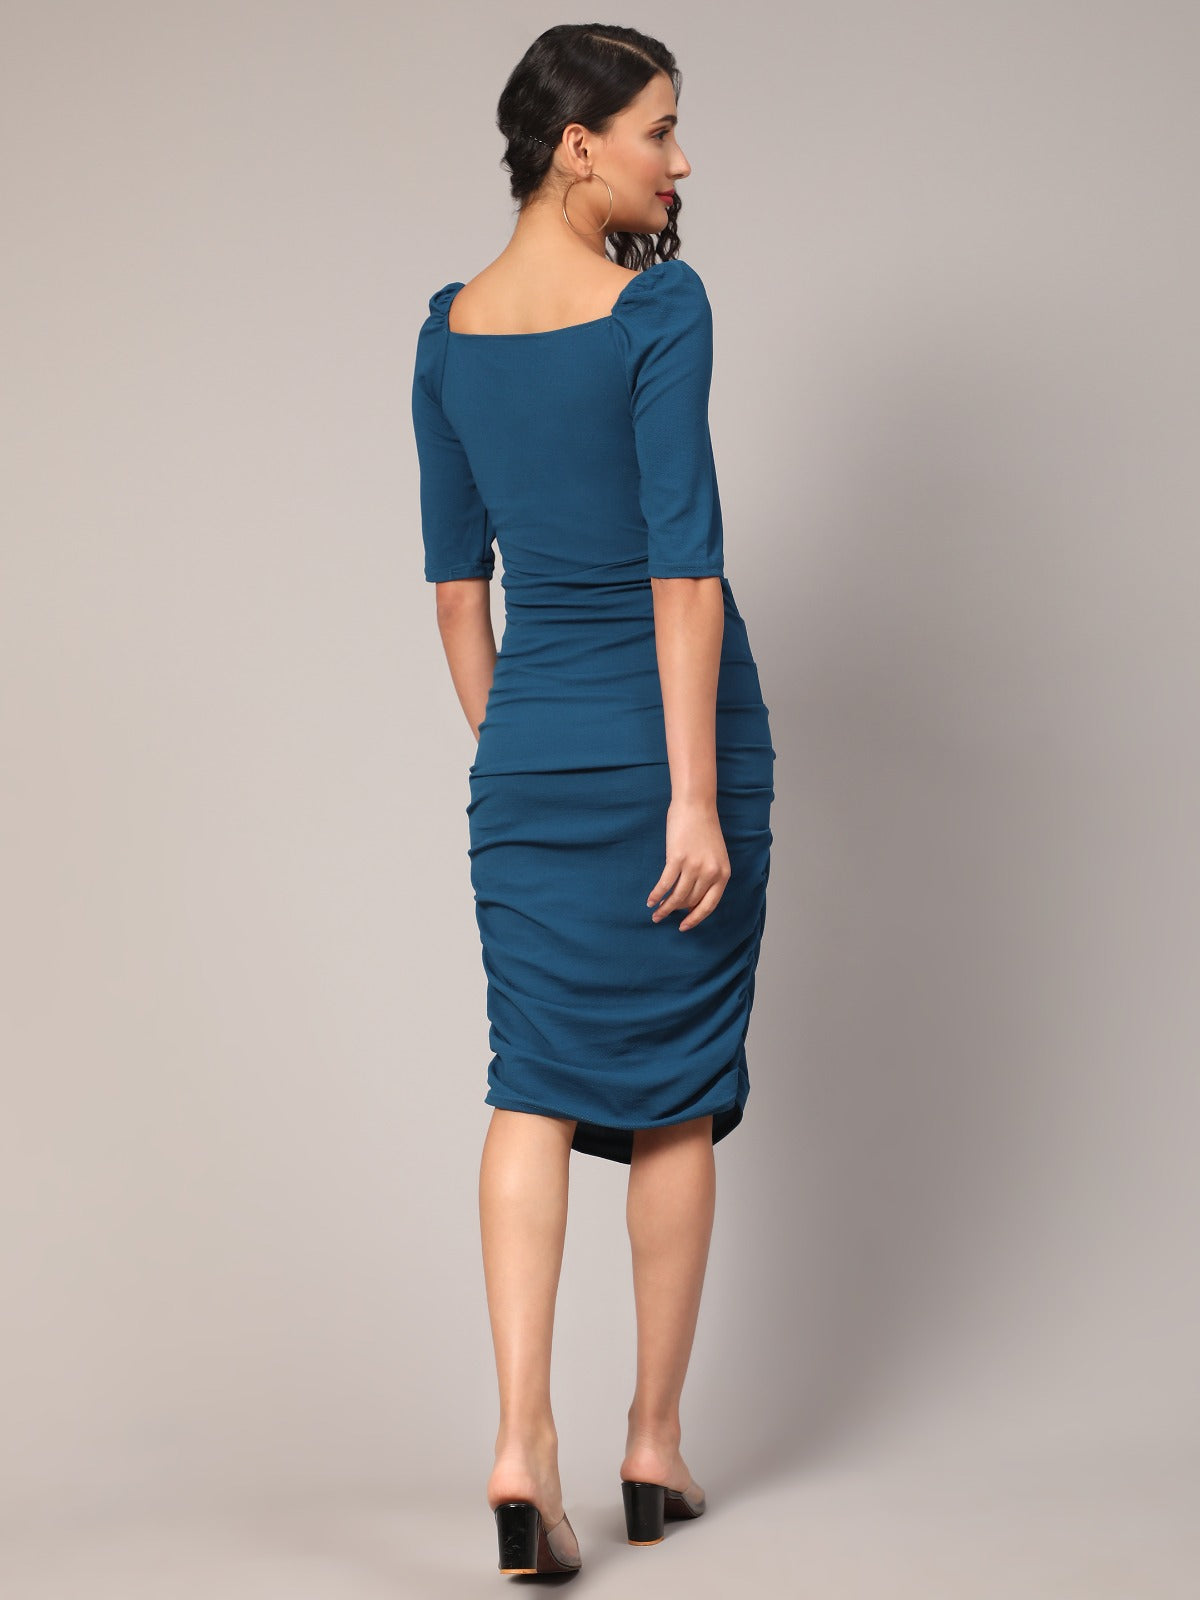 Vivana exclusive Stylist Blue Dress